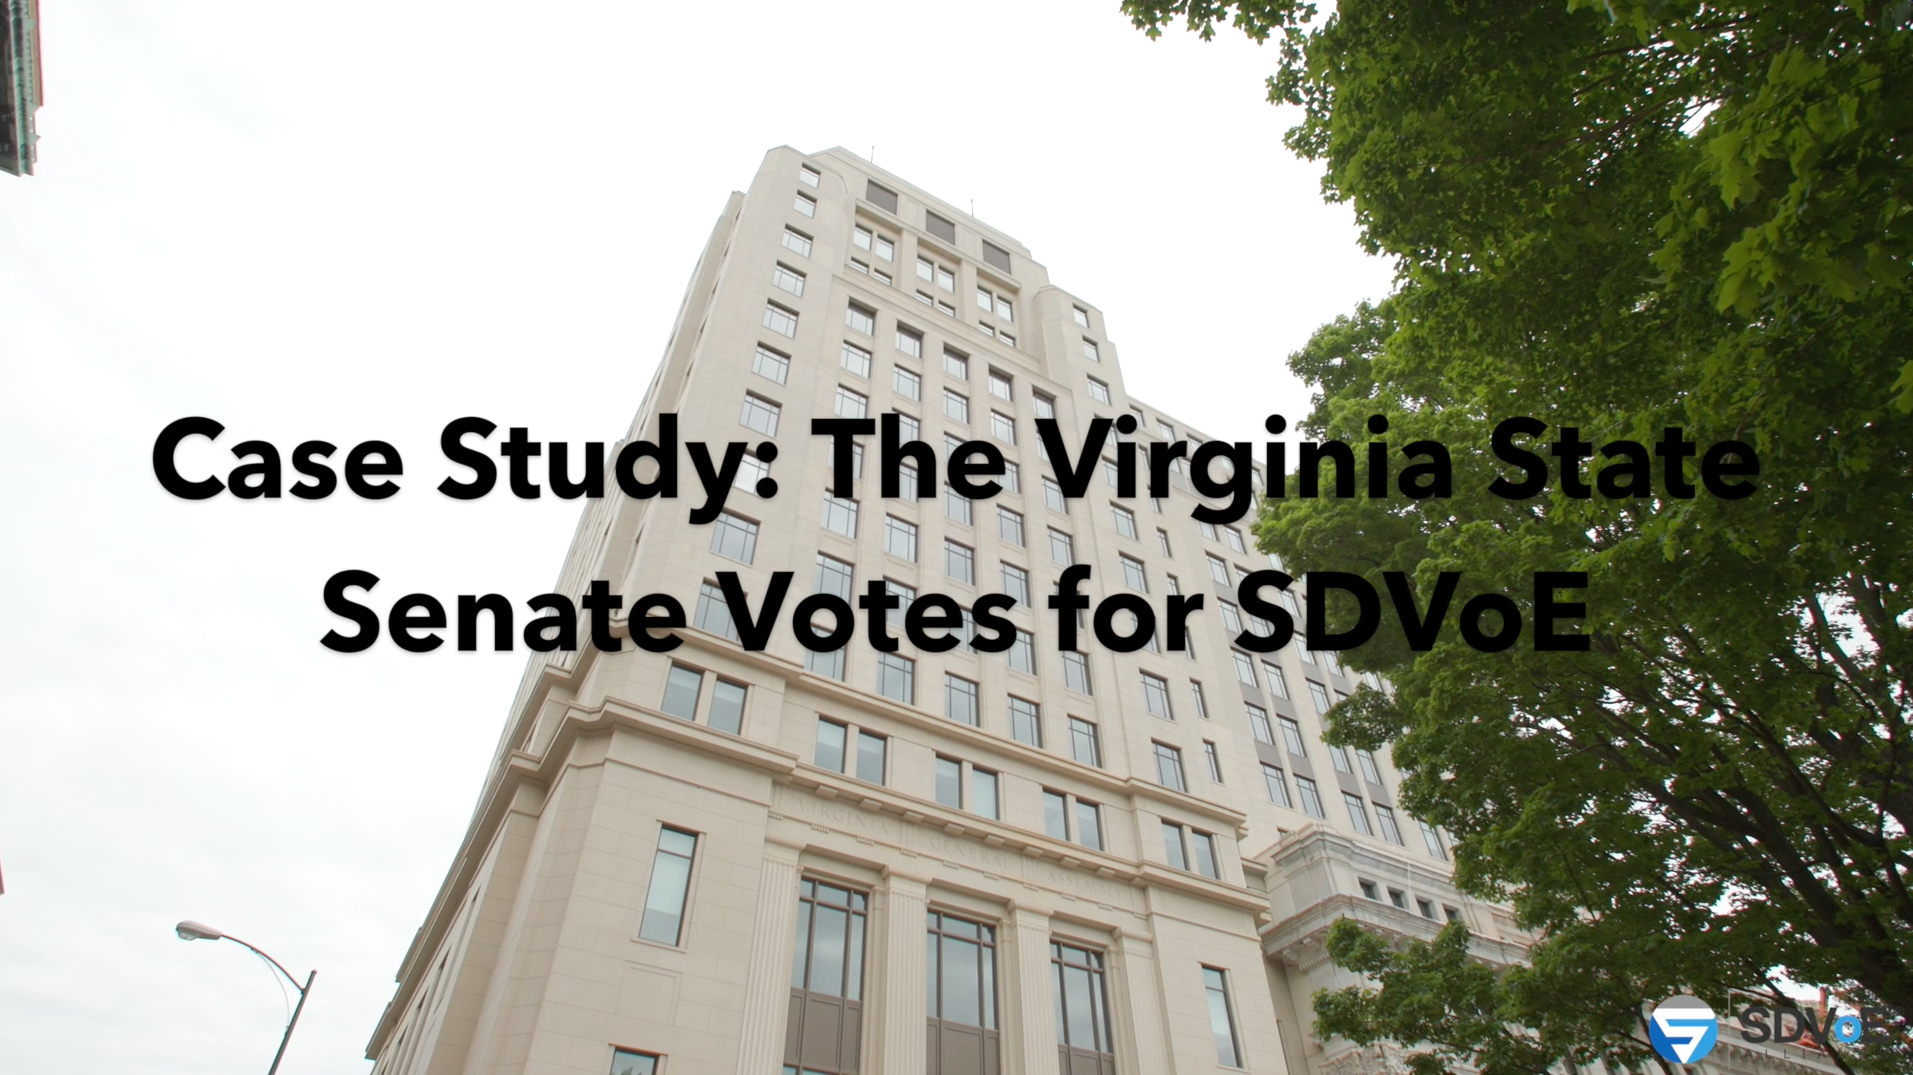 SDVoE Case Study: The Virginia State Senate Votes for SDVoE